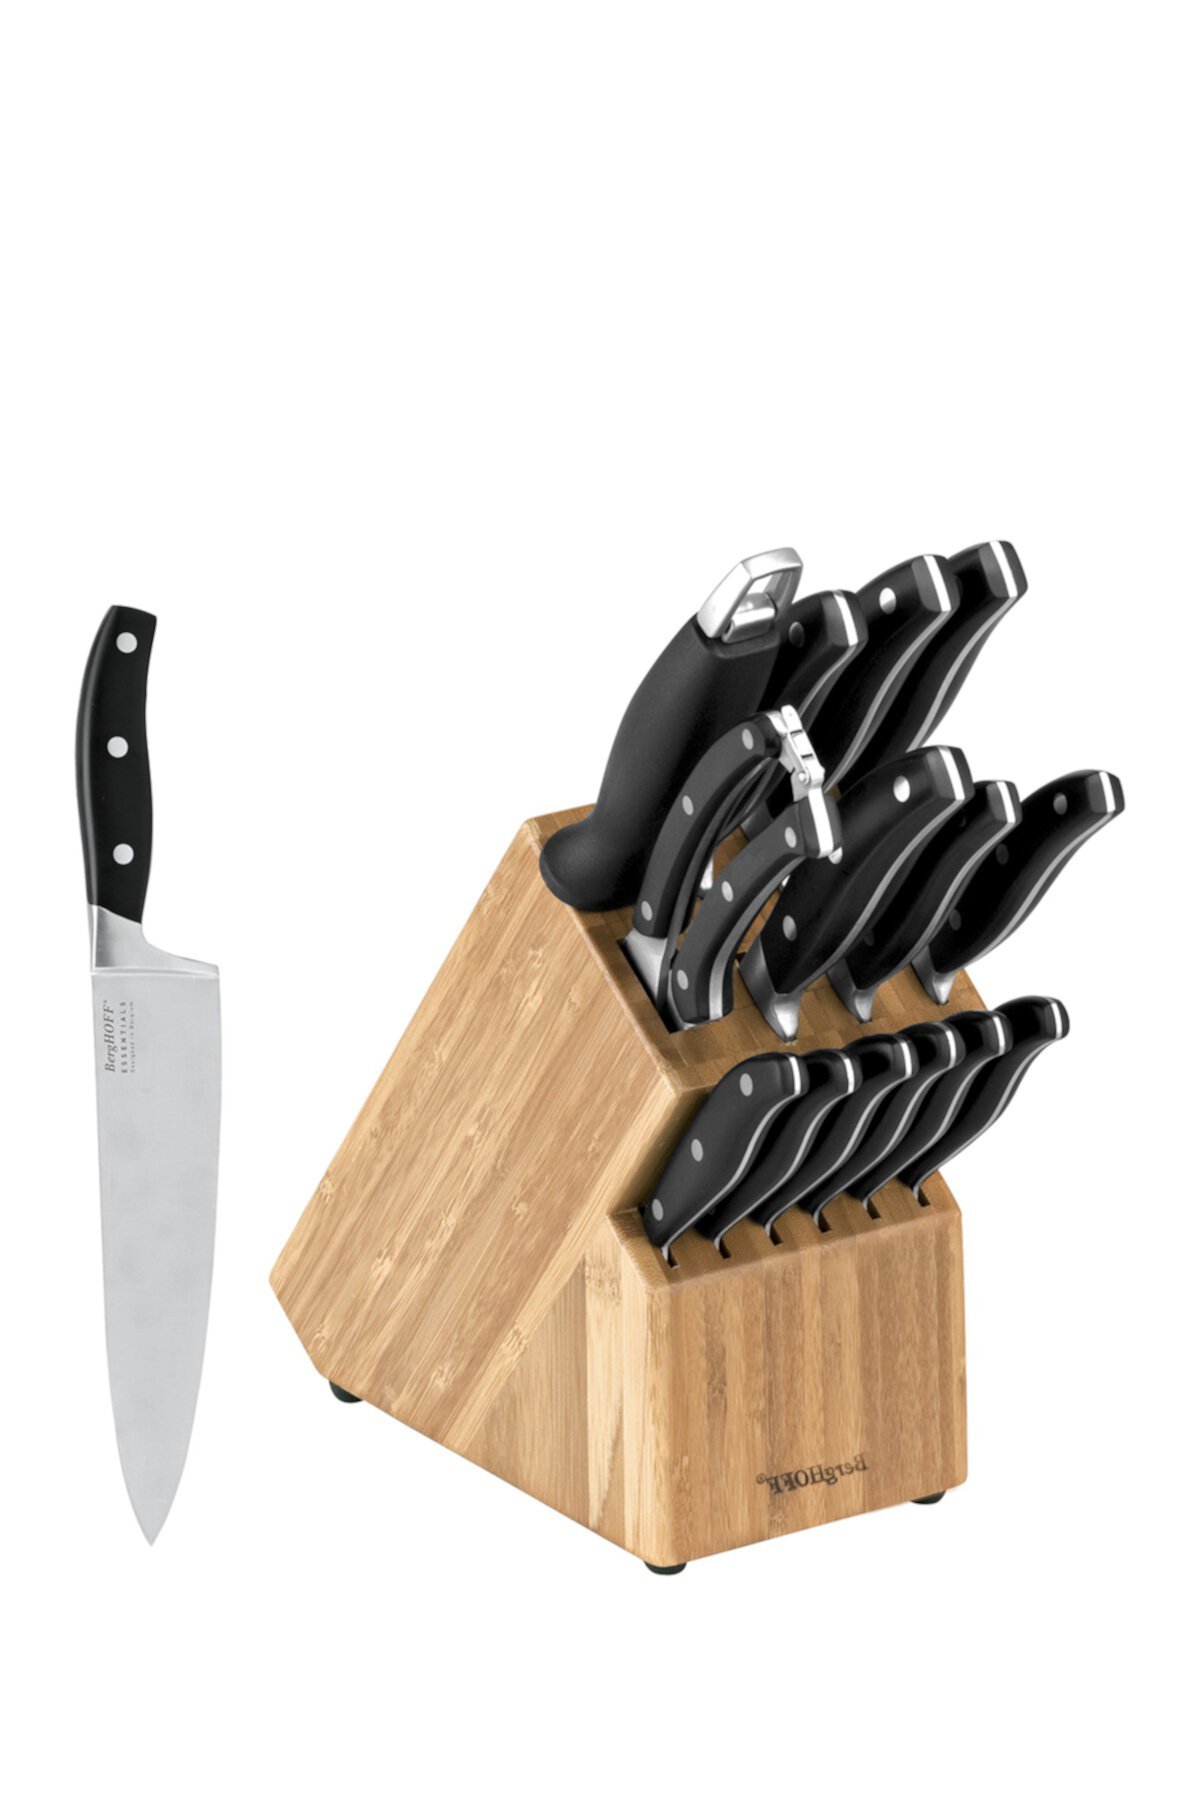 Essentials Stainless Steel Cutlery Block - 15 Piece Set BergHOFF